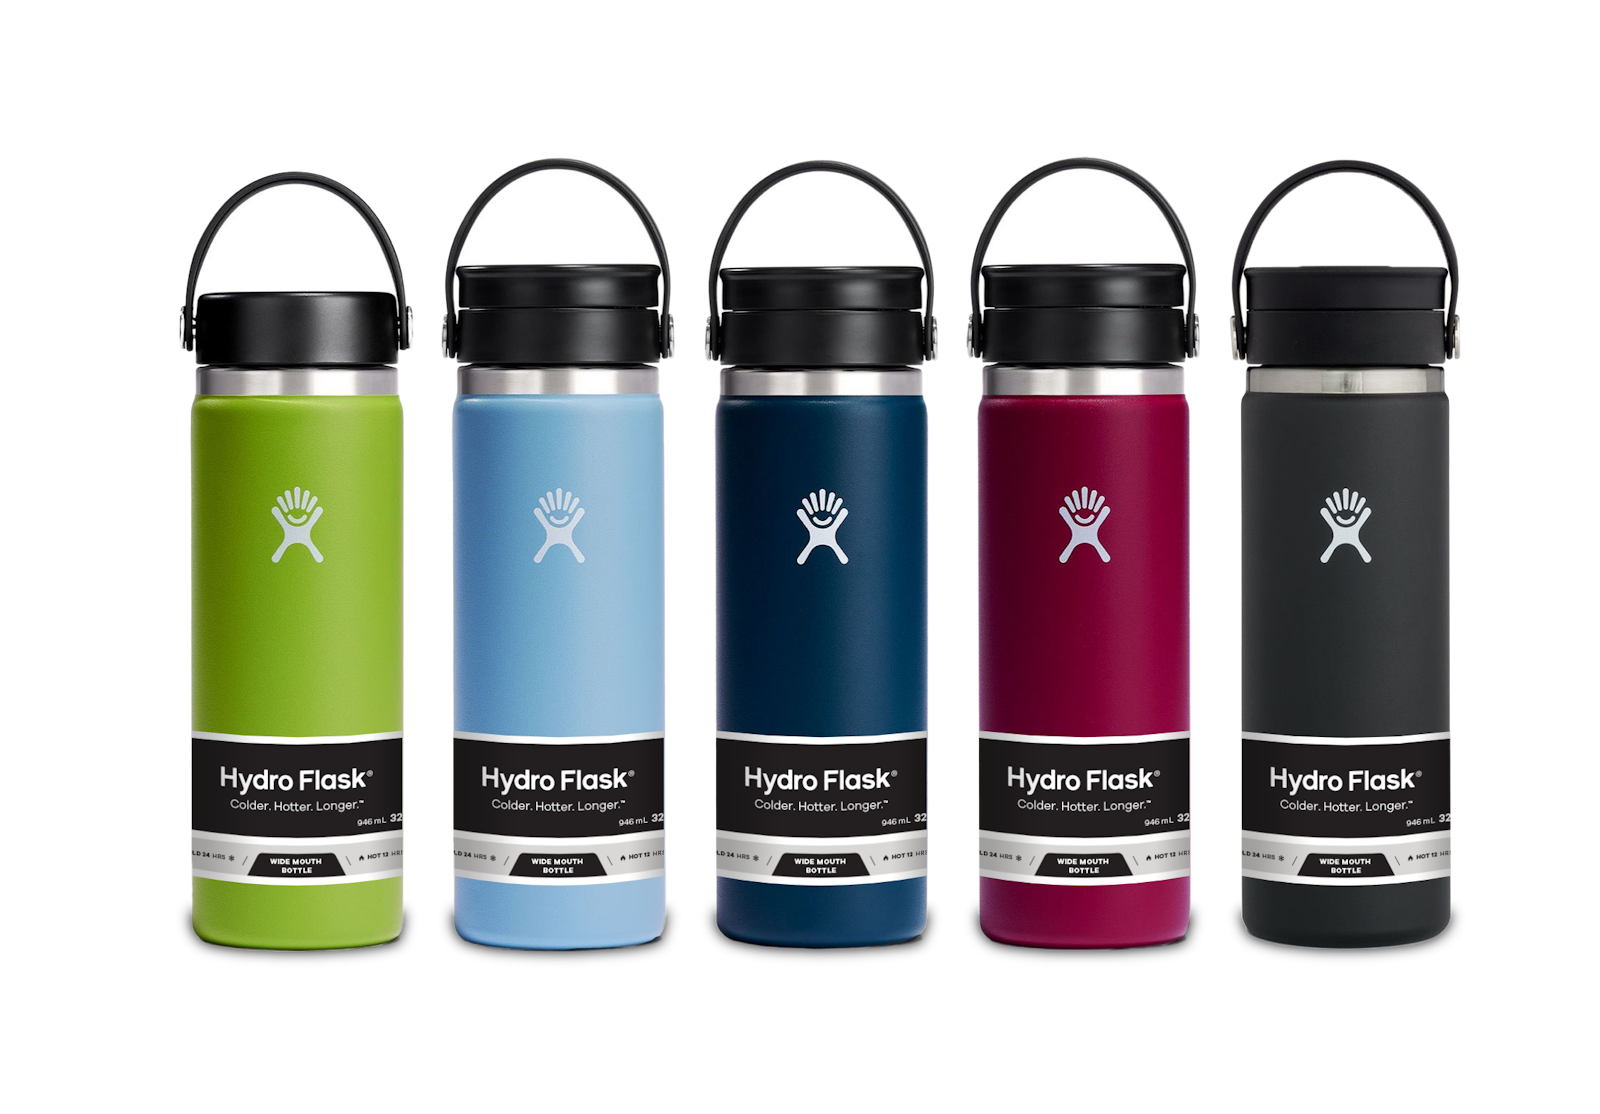 hydro-flask-minneapolis-strategic-brand-design-agency-capsule